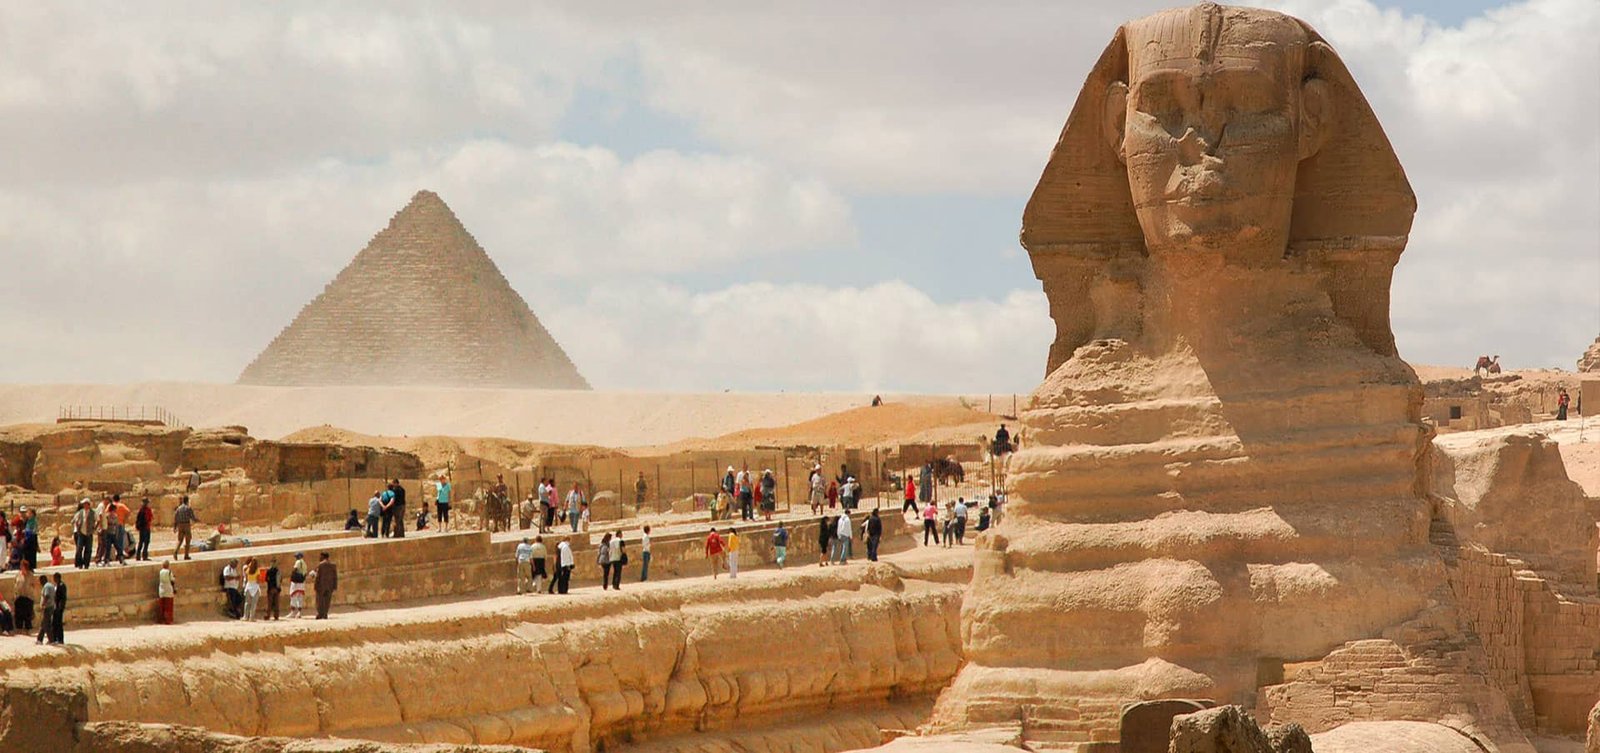 pyramids - sphinx -Egyptian museum Cairo day tour